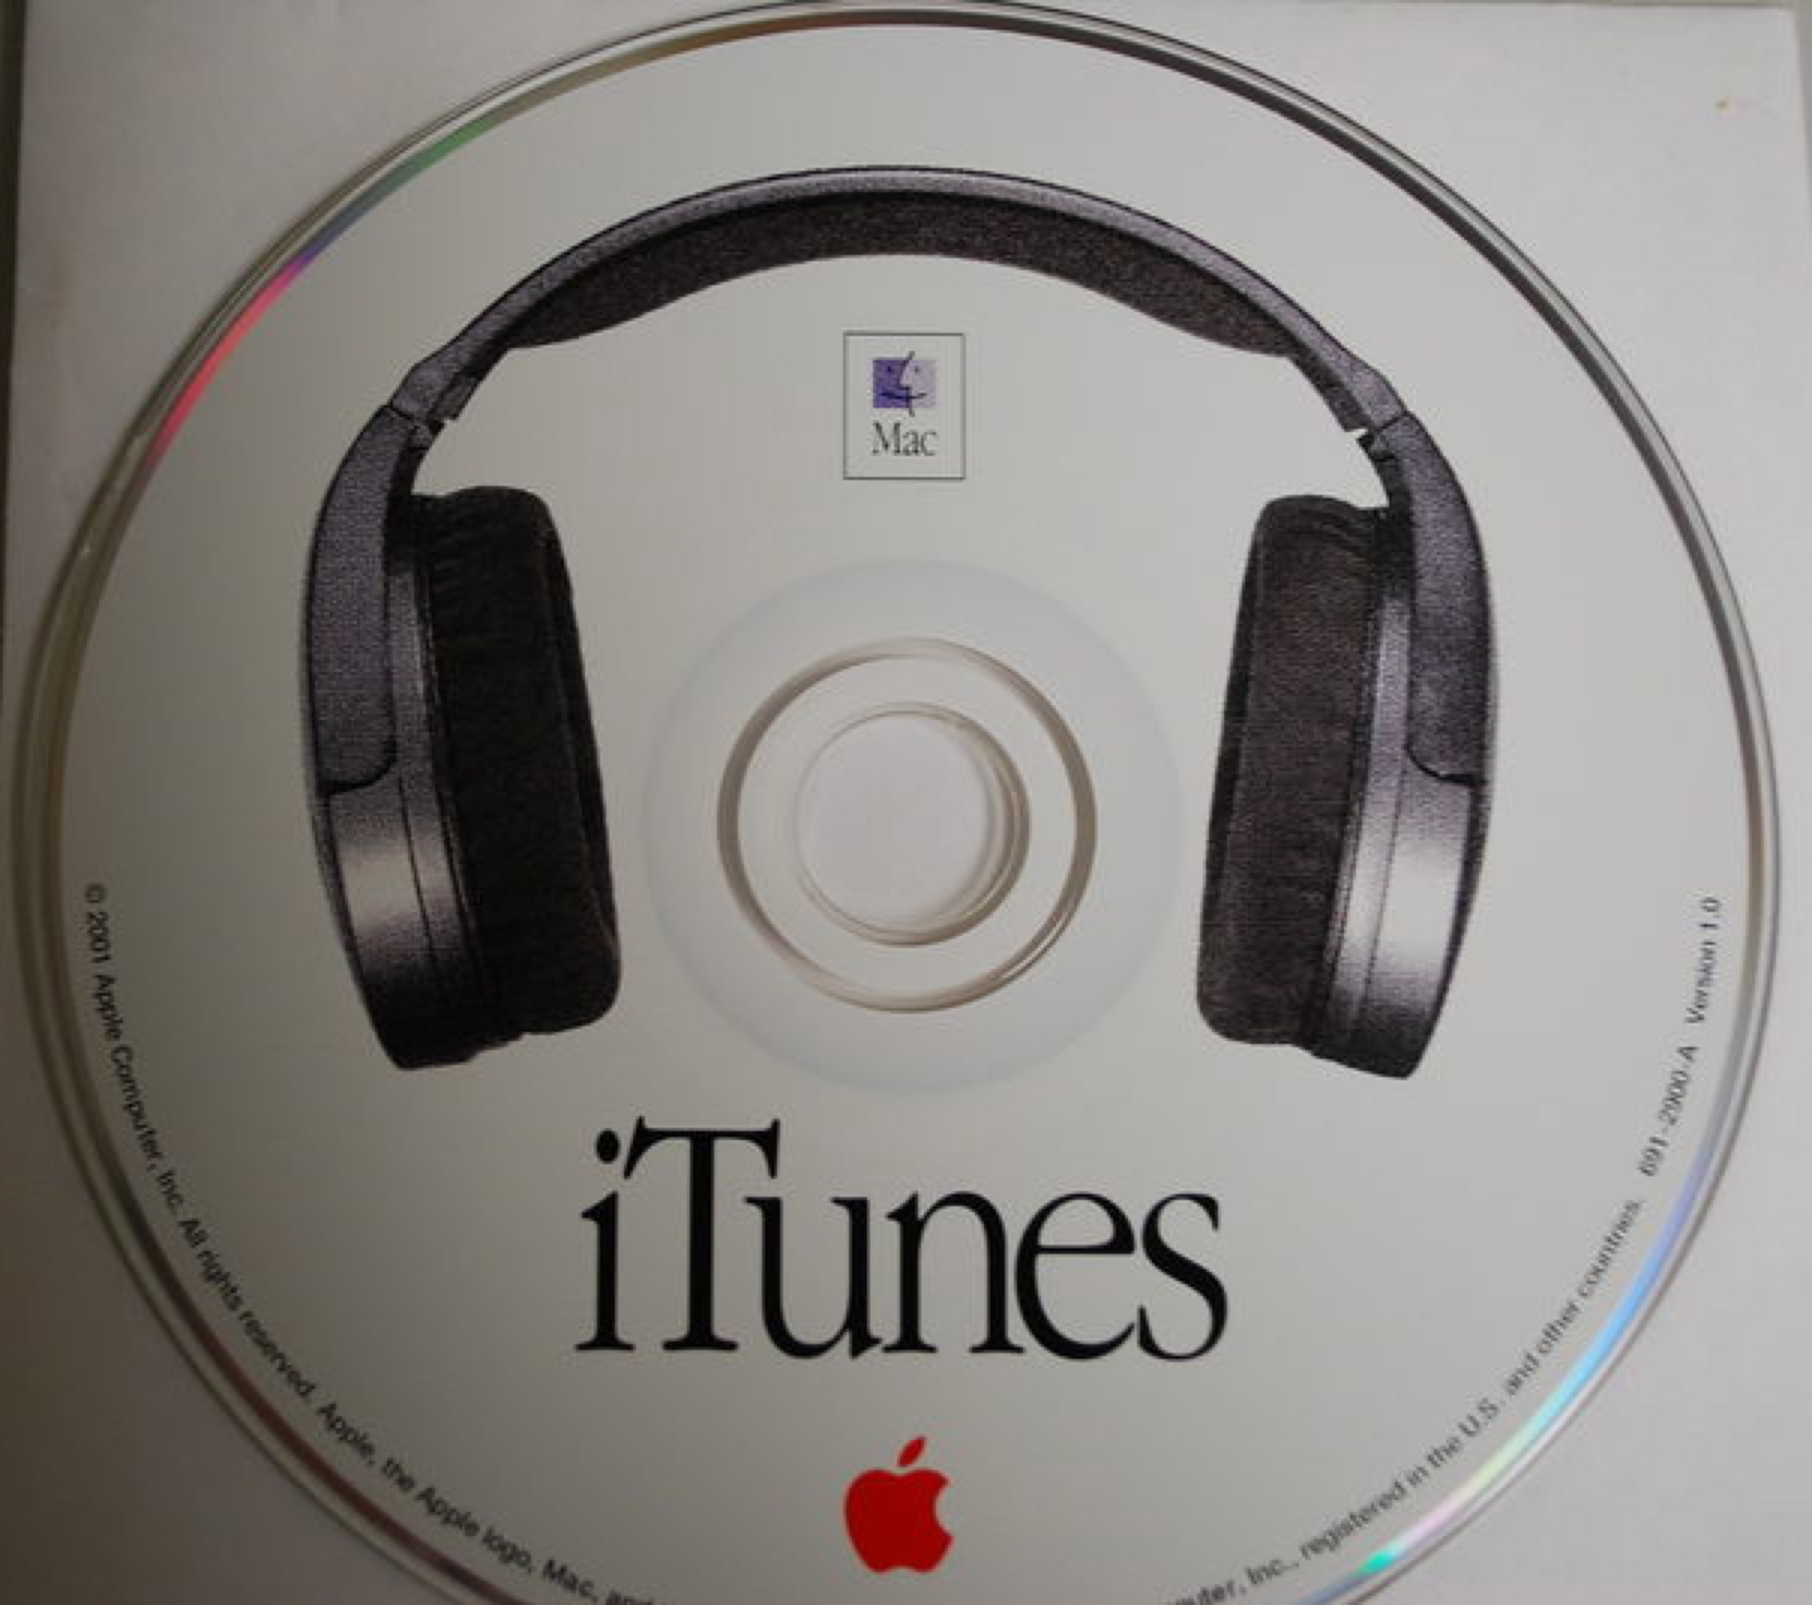 burn cd from itunes 12 mac